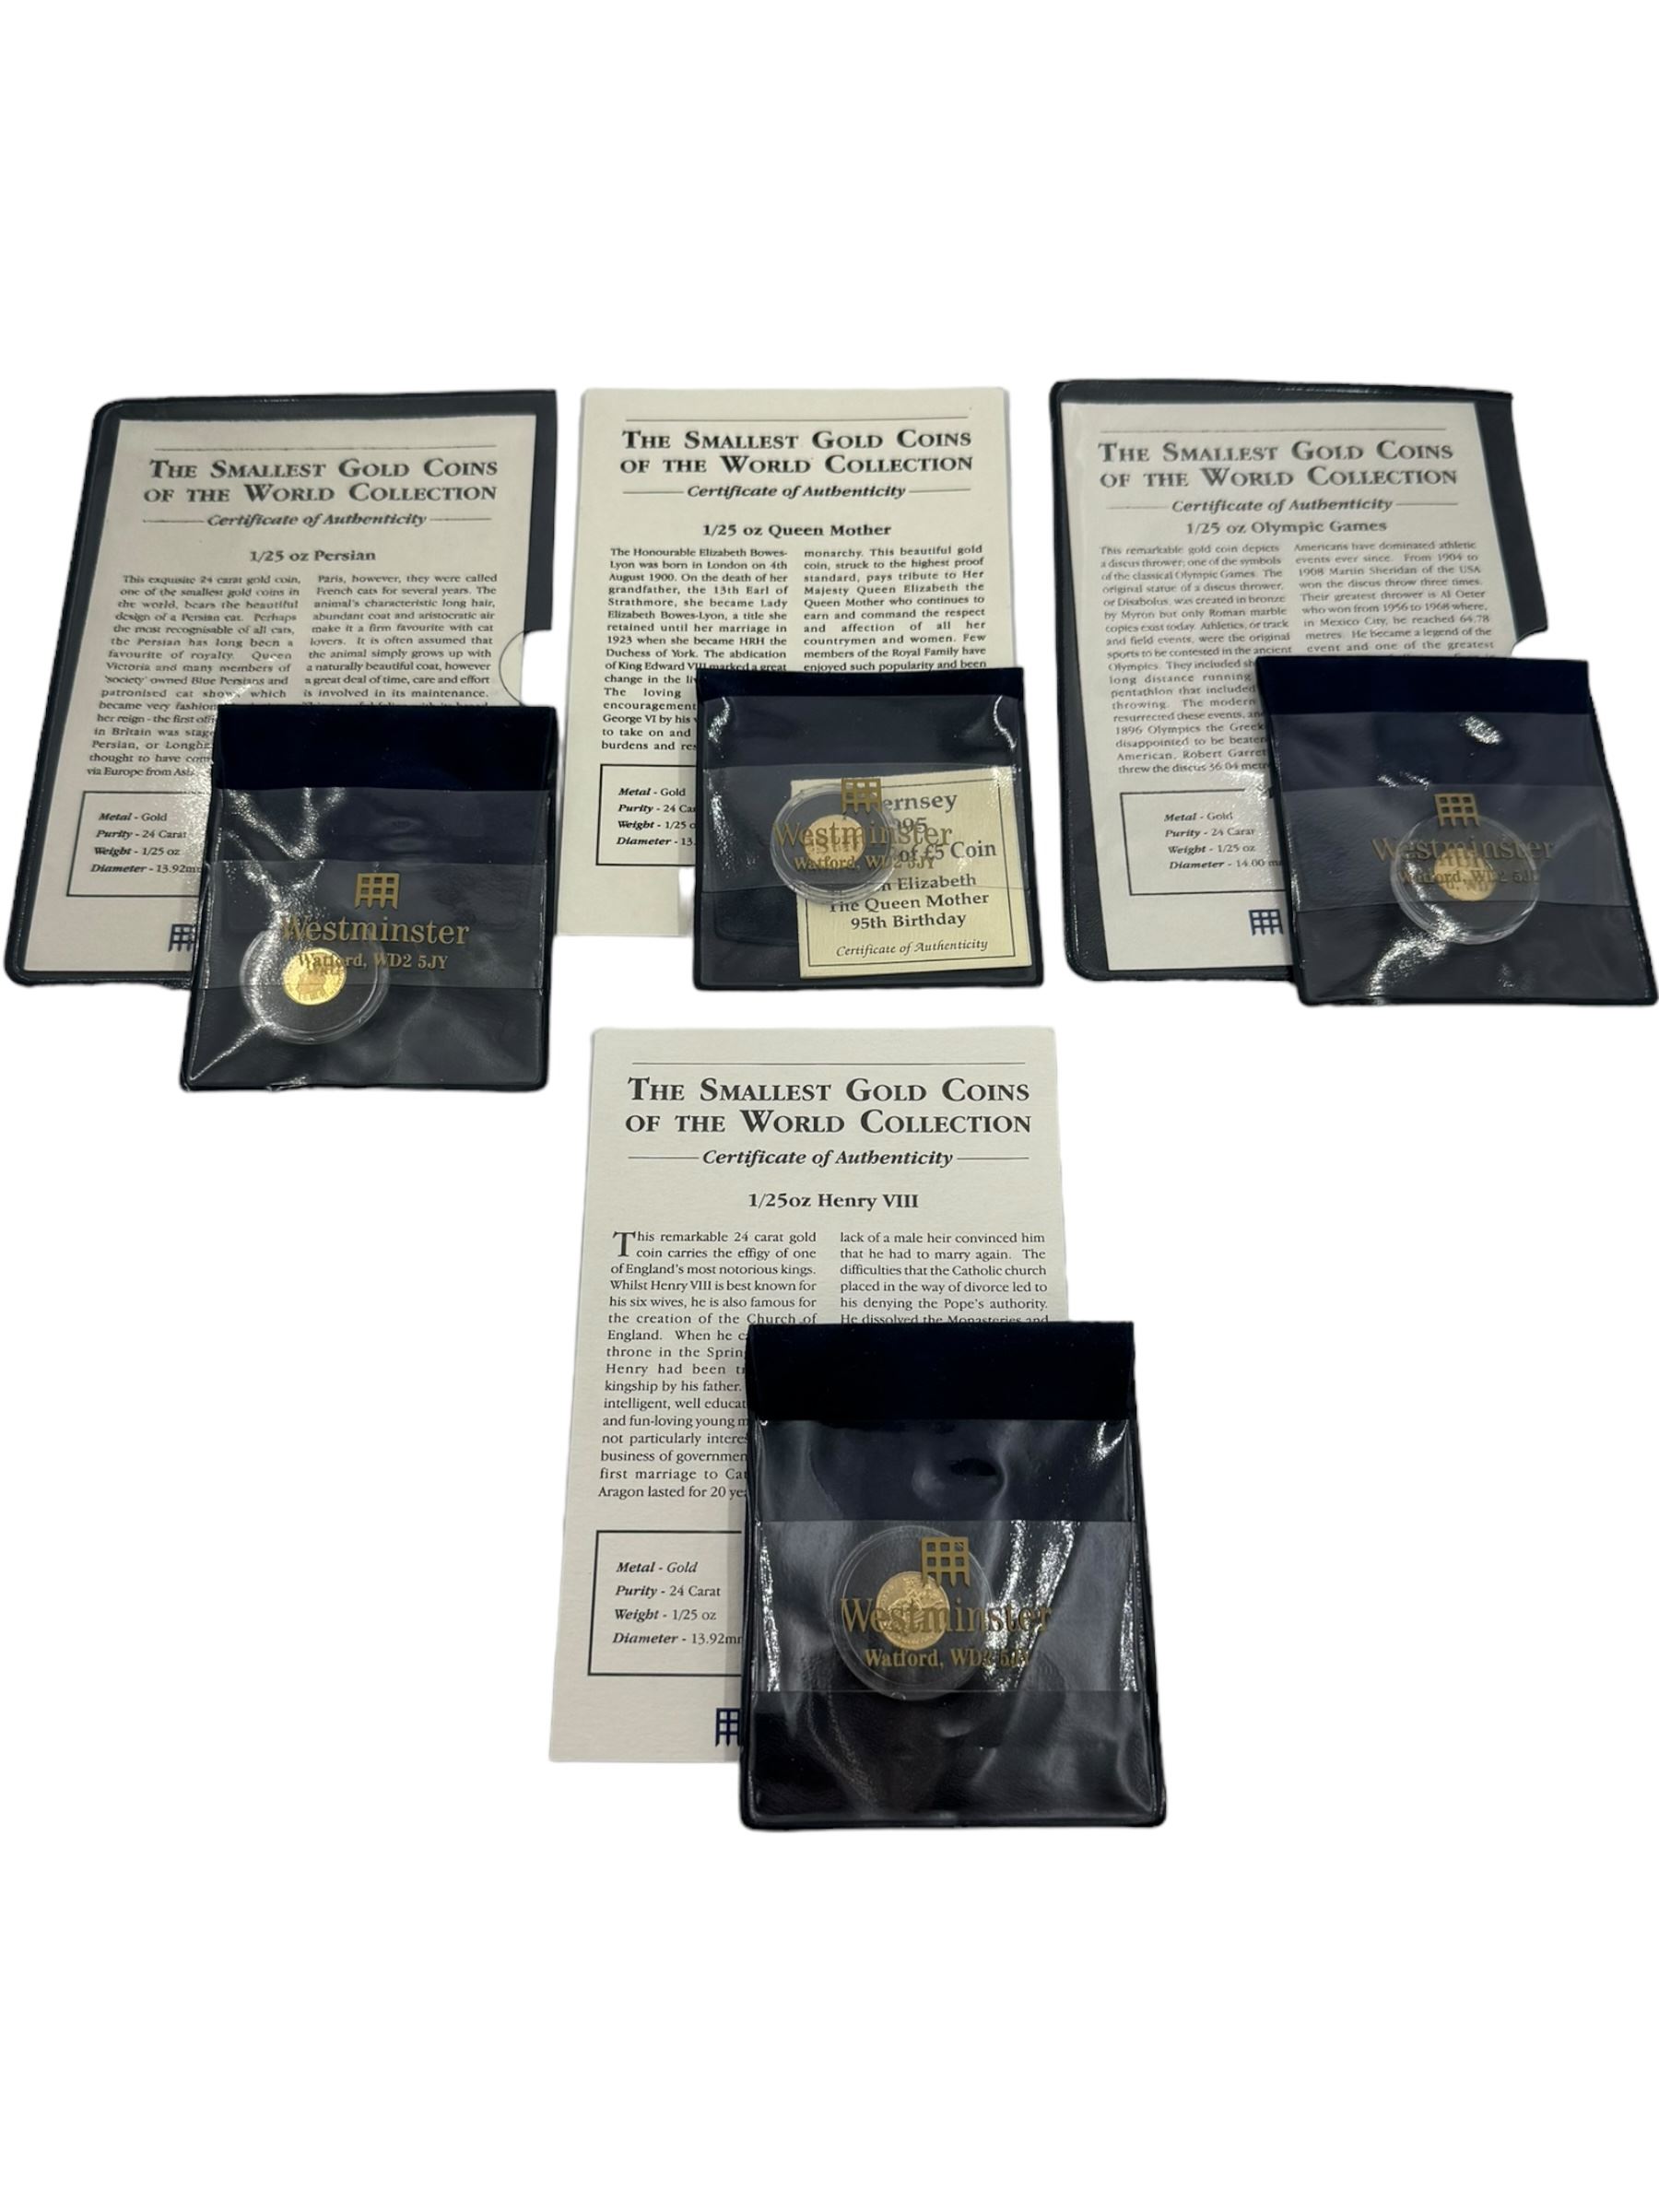 Four one twenty-fifth of an ounce 24 carat gold coins